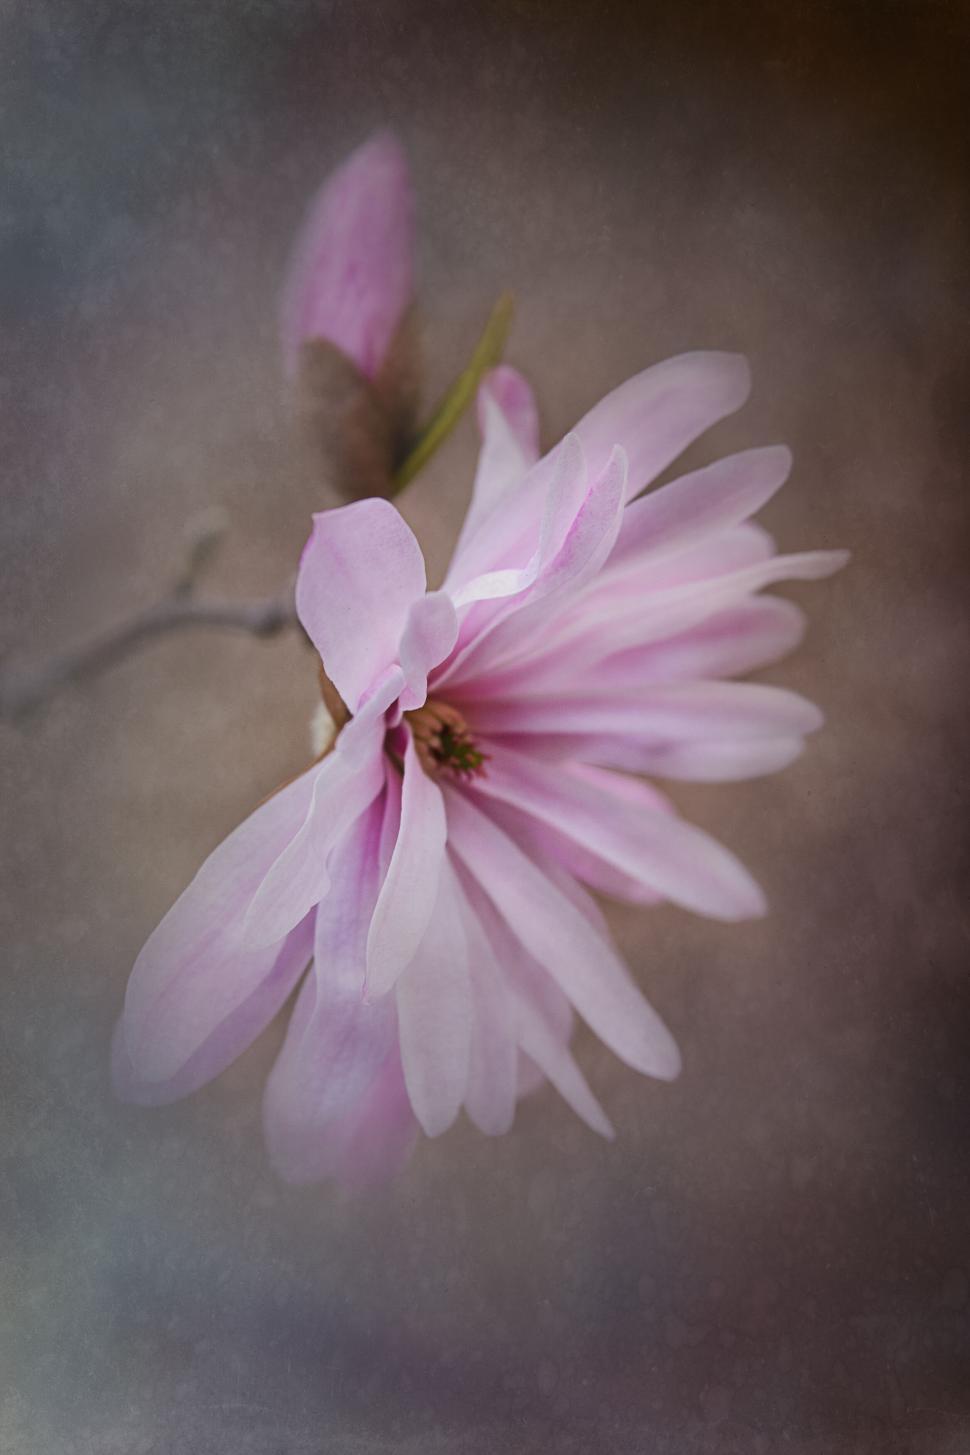 Free Image of Delicate pink magnolia blossom on dark 